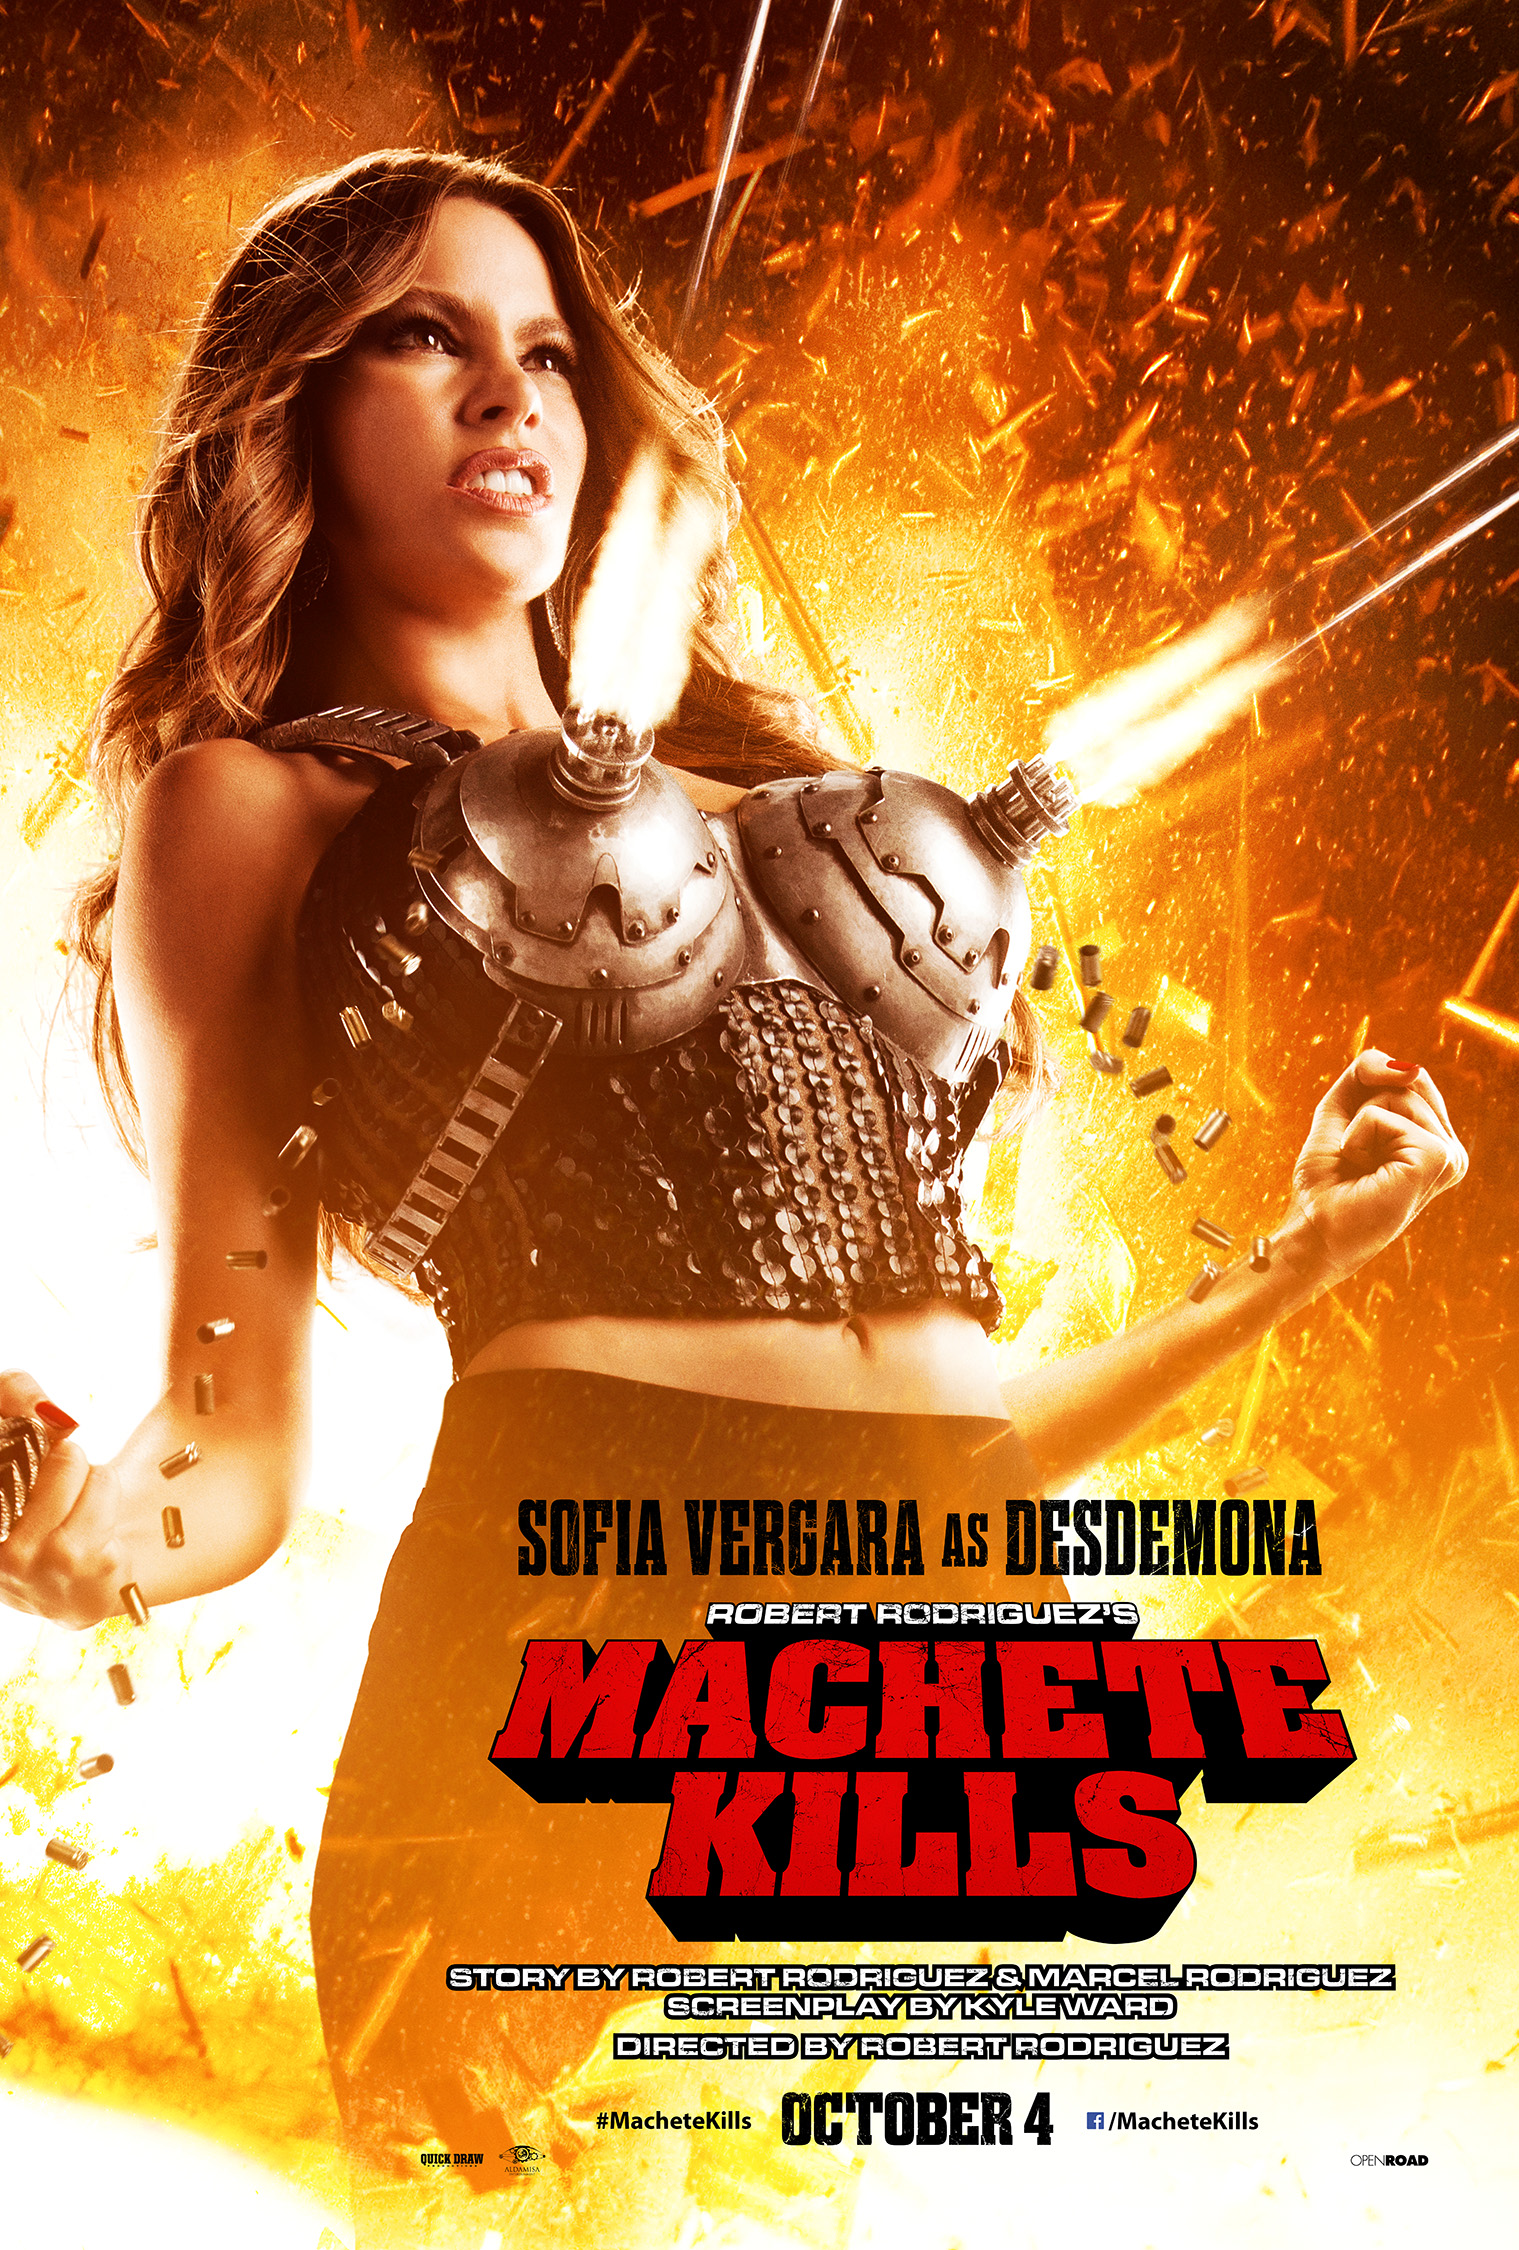 Machete Kills To Premiere At Fantastic Fest In Austin, Texas On September 19, 2013